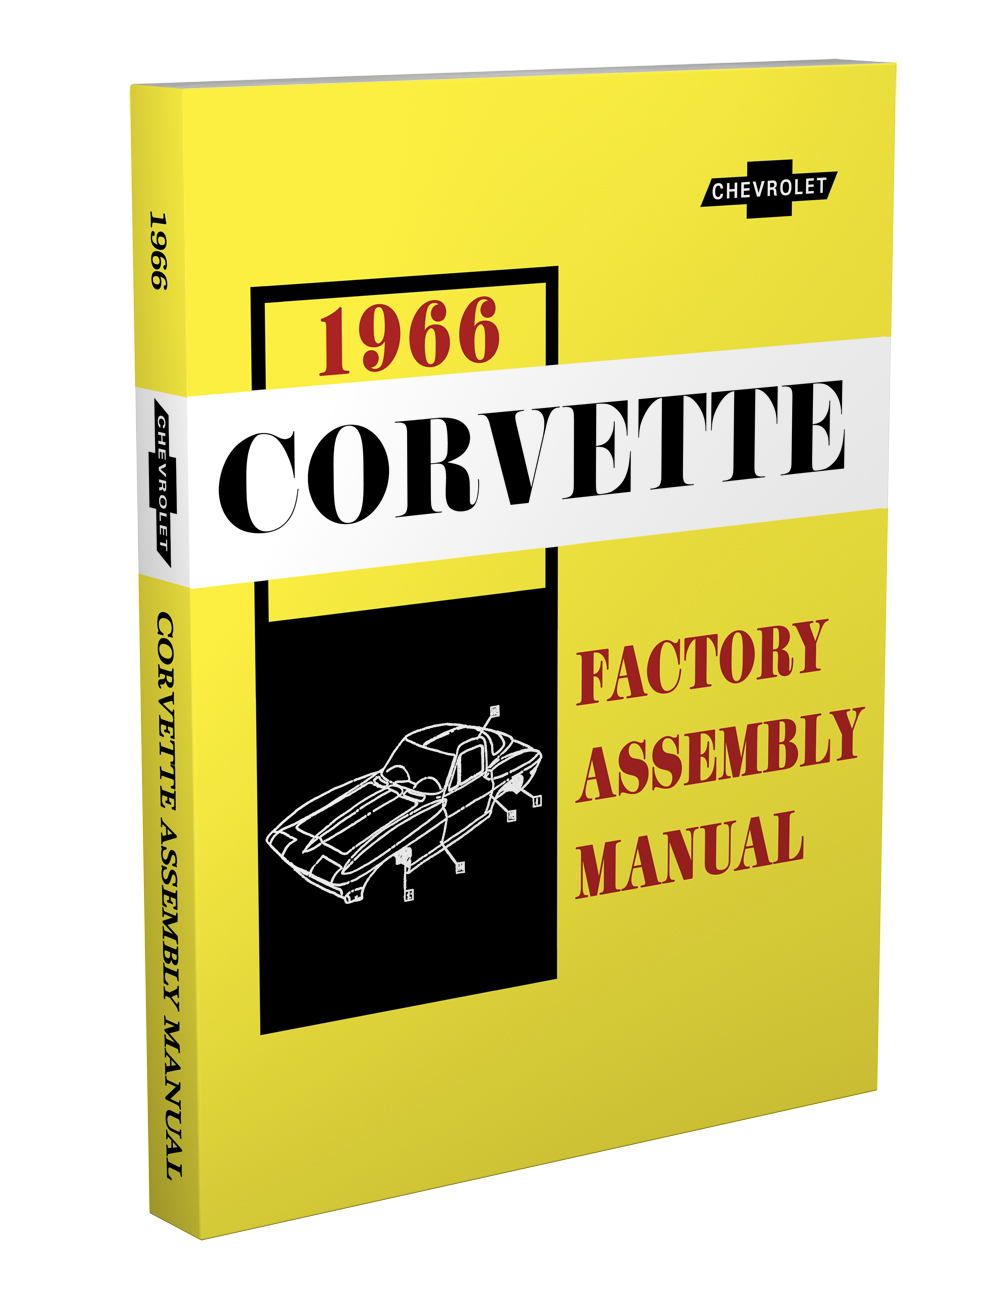 CORVETTE 1964 MANUAL PARTS ASSEMBLY RESTORATION BOOK CHEVROLET 